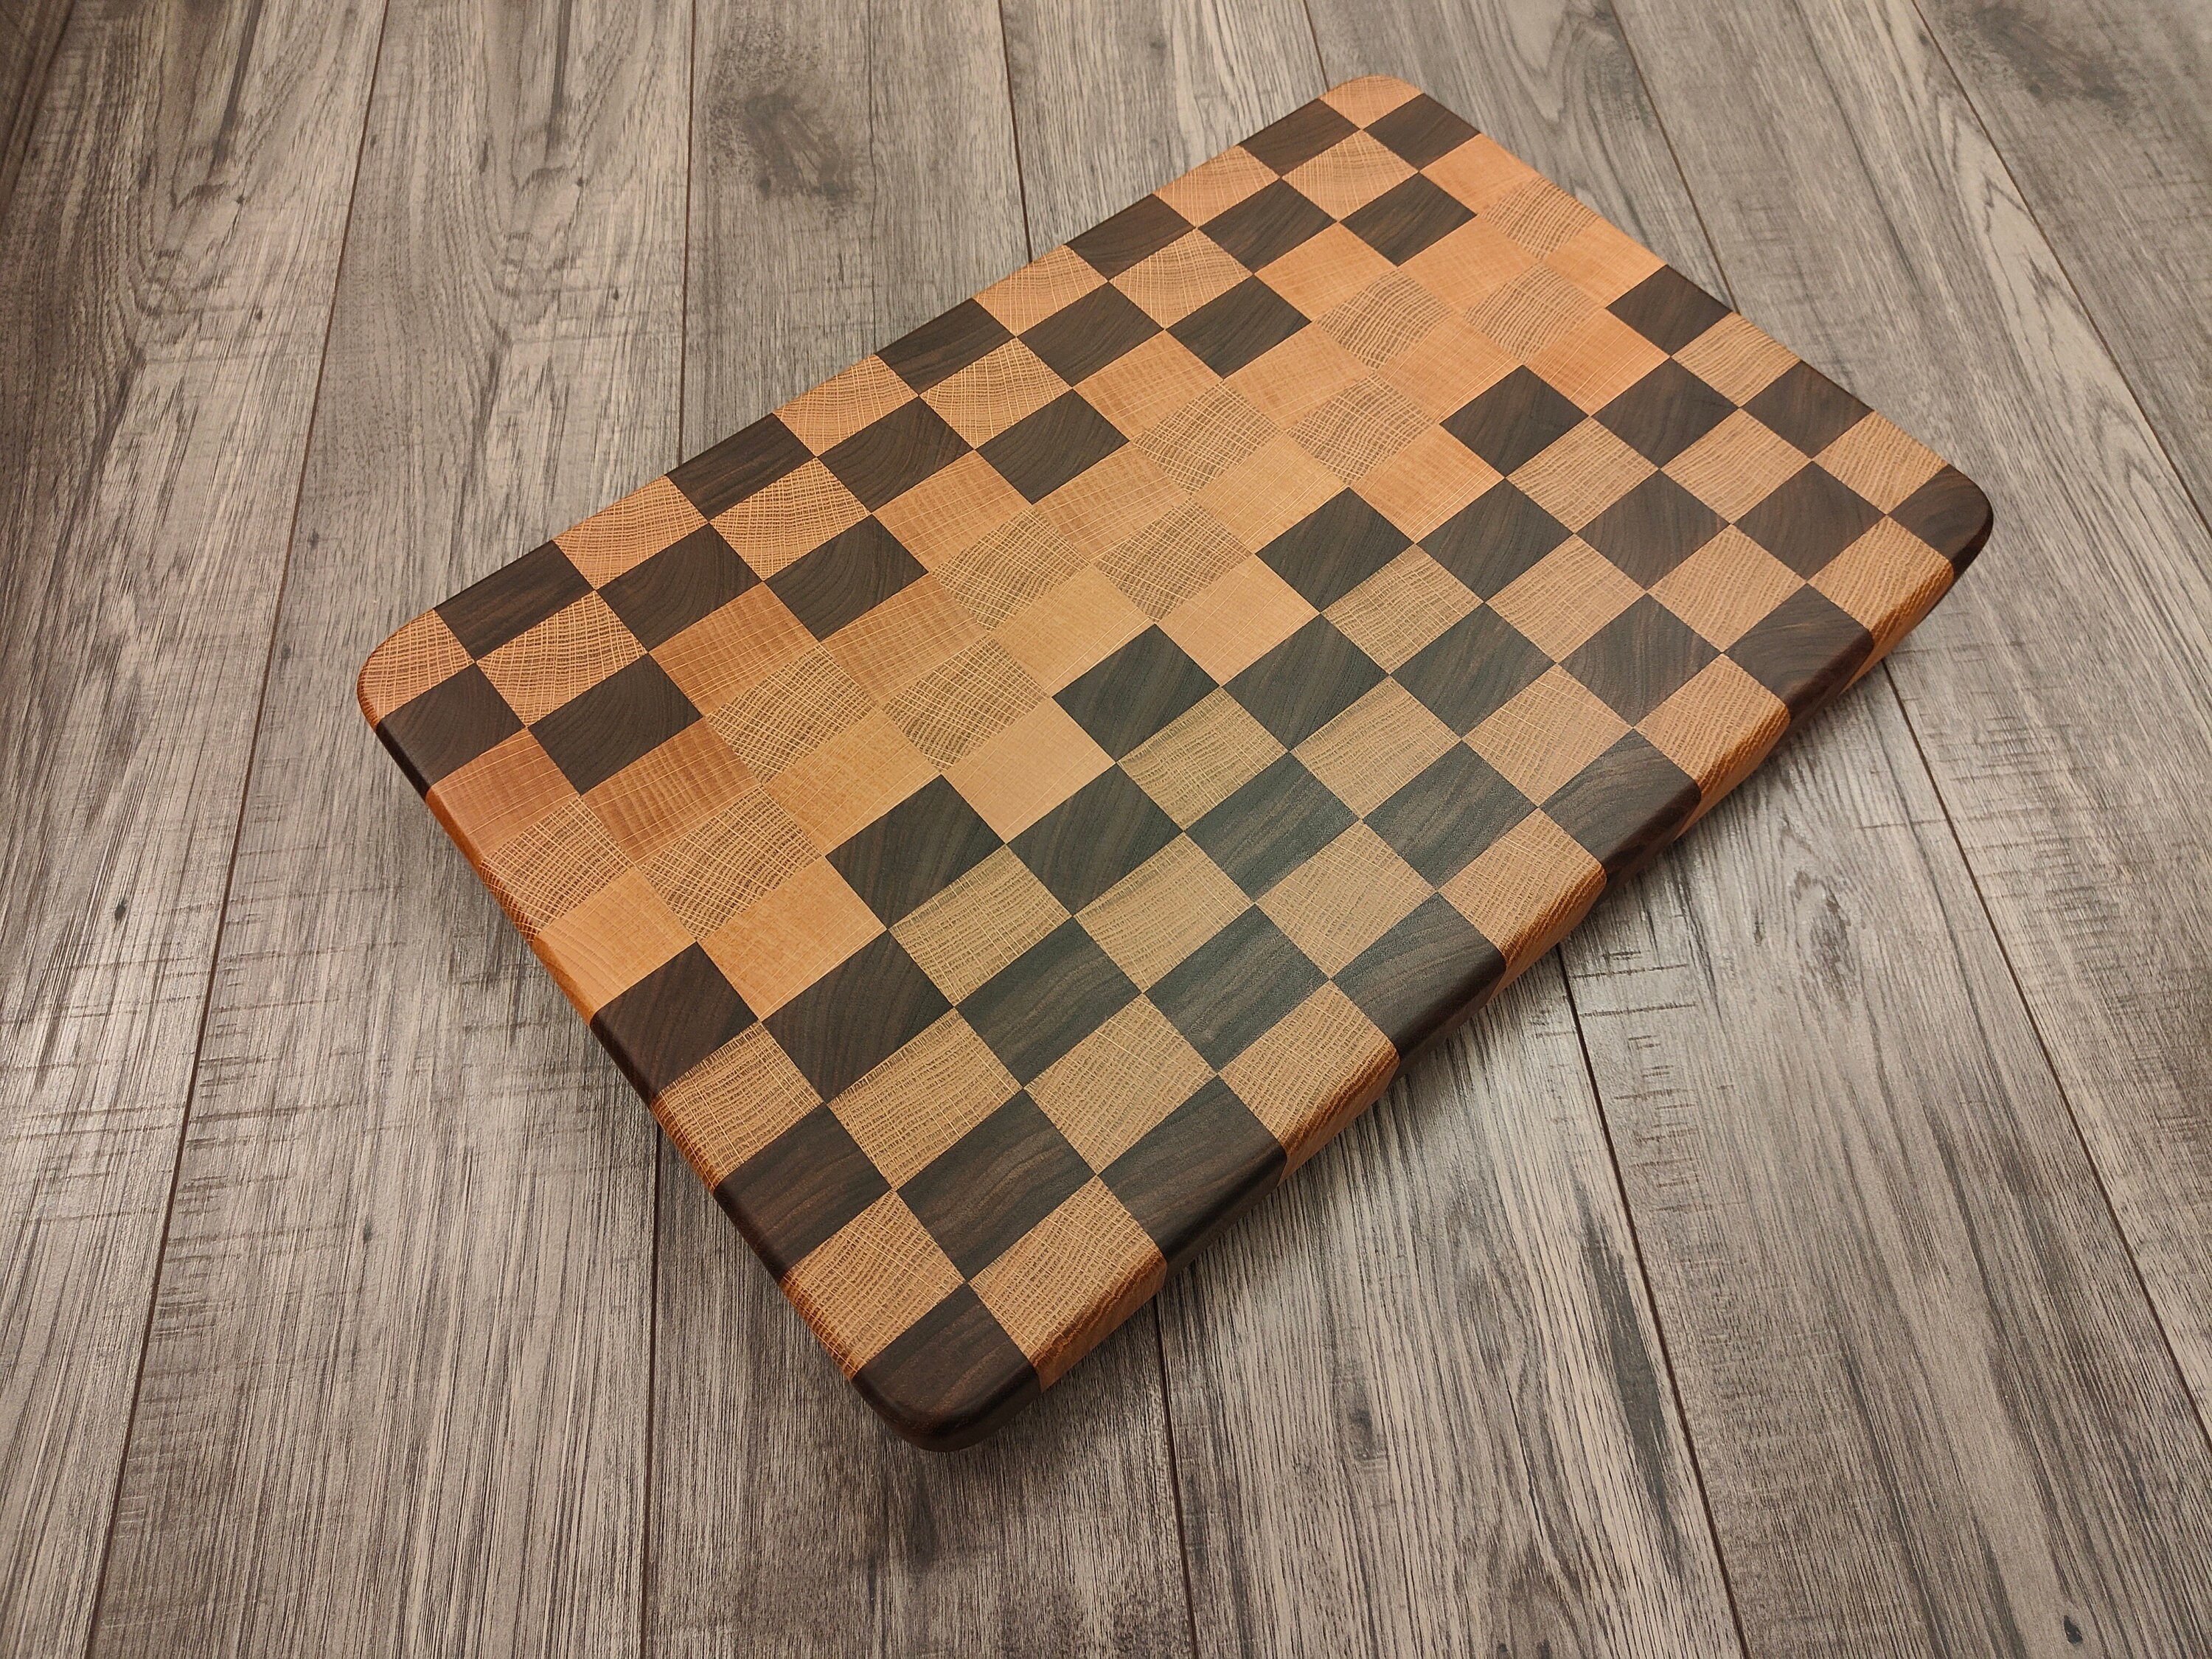 Cutting Board - 10x8 Inches Small Wood Cutting Board - Oak Cutting Board -  20 mm Thin Cutting Board - Real Wood Cutting Board - Chopping Board for  Kitchen - Edge Grain Oak Wood Board 